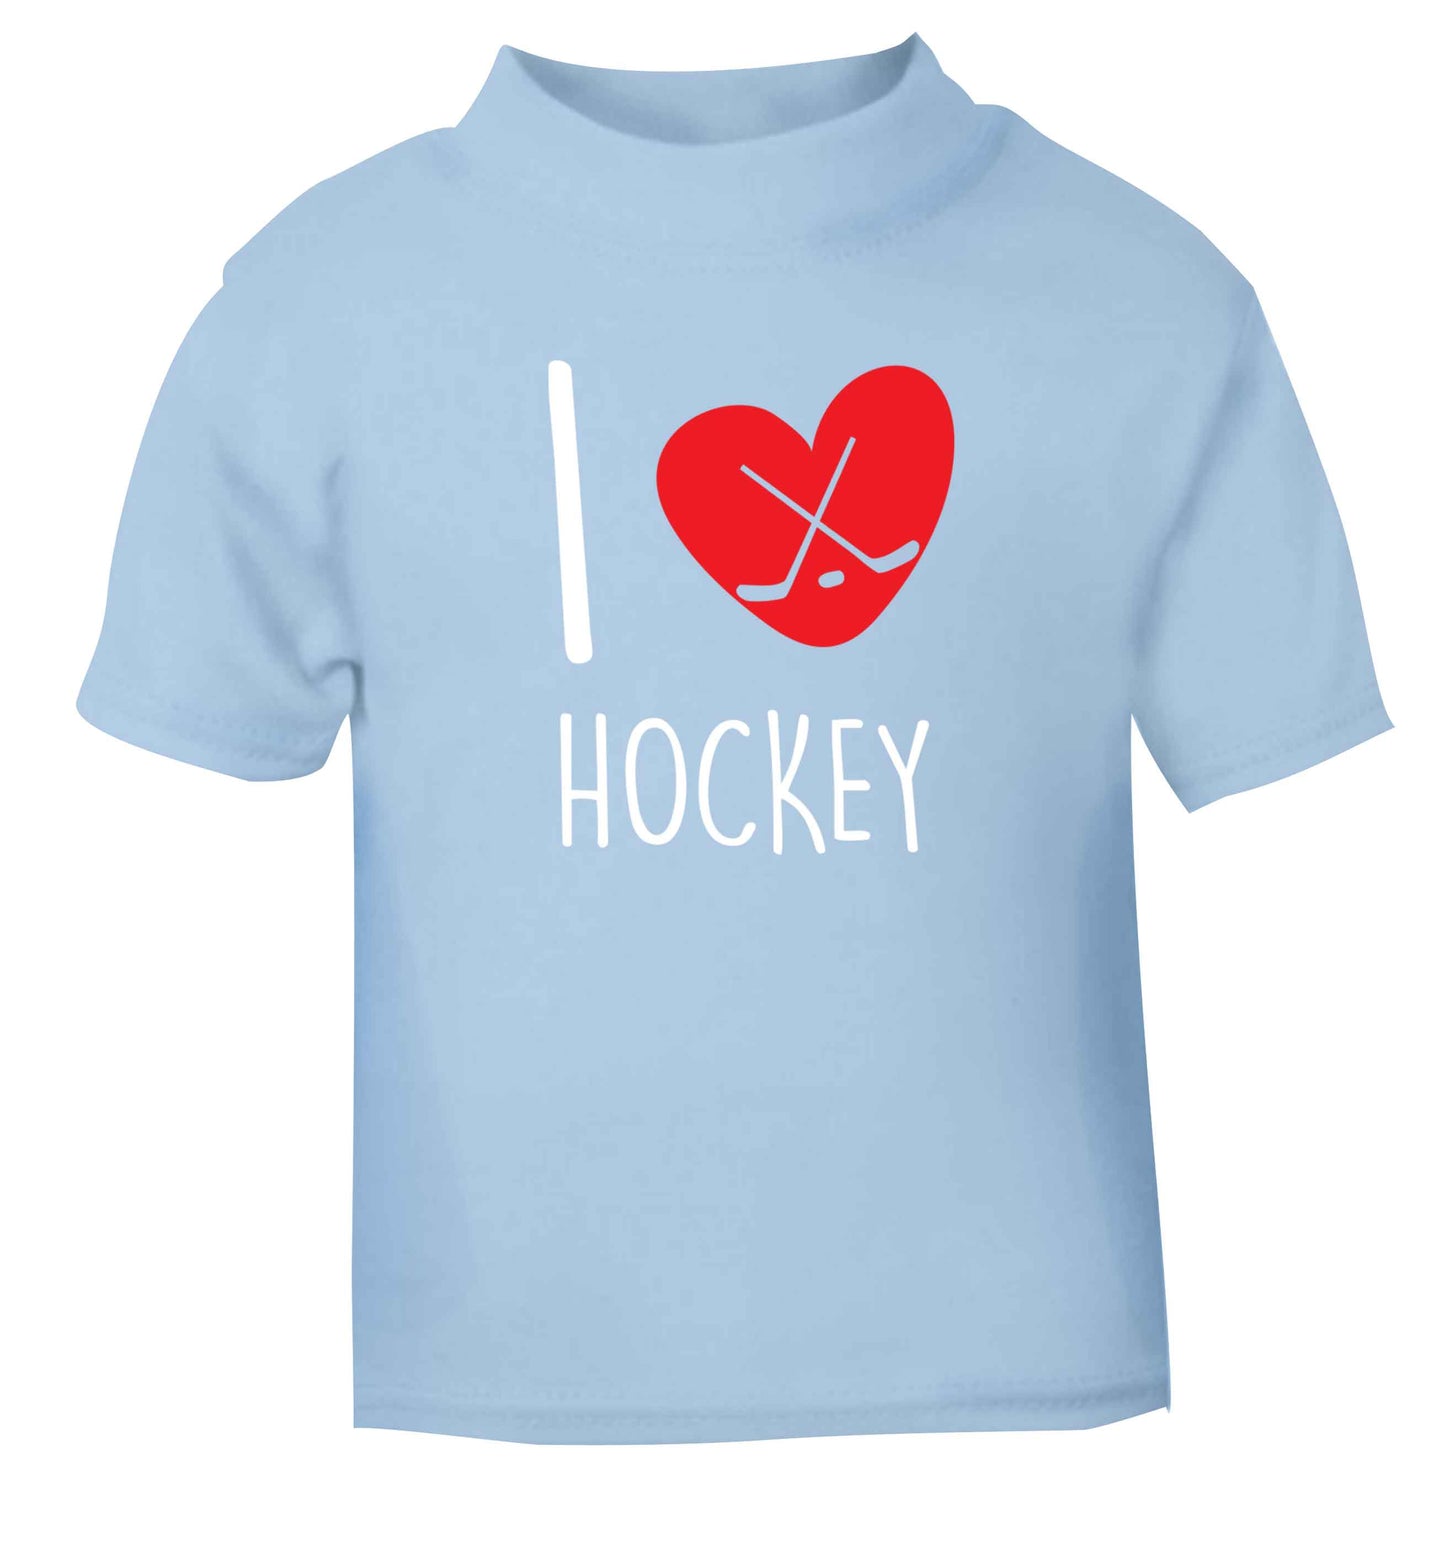 I love hockey light blue Baby Toddler Tshirt 2 Years